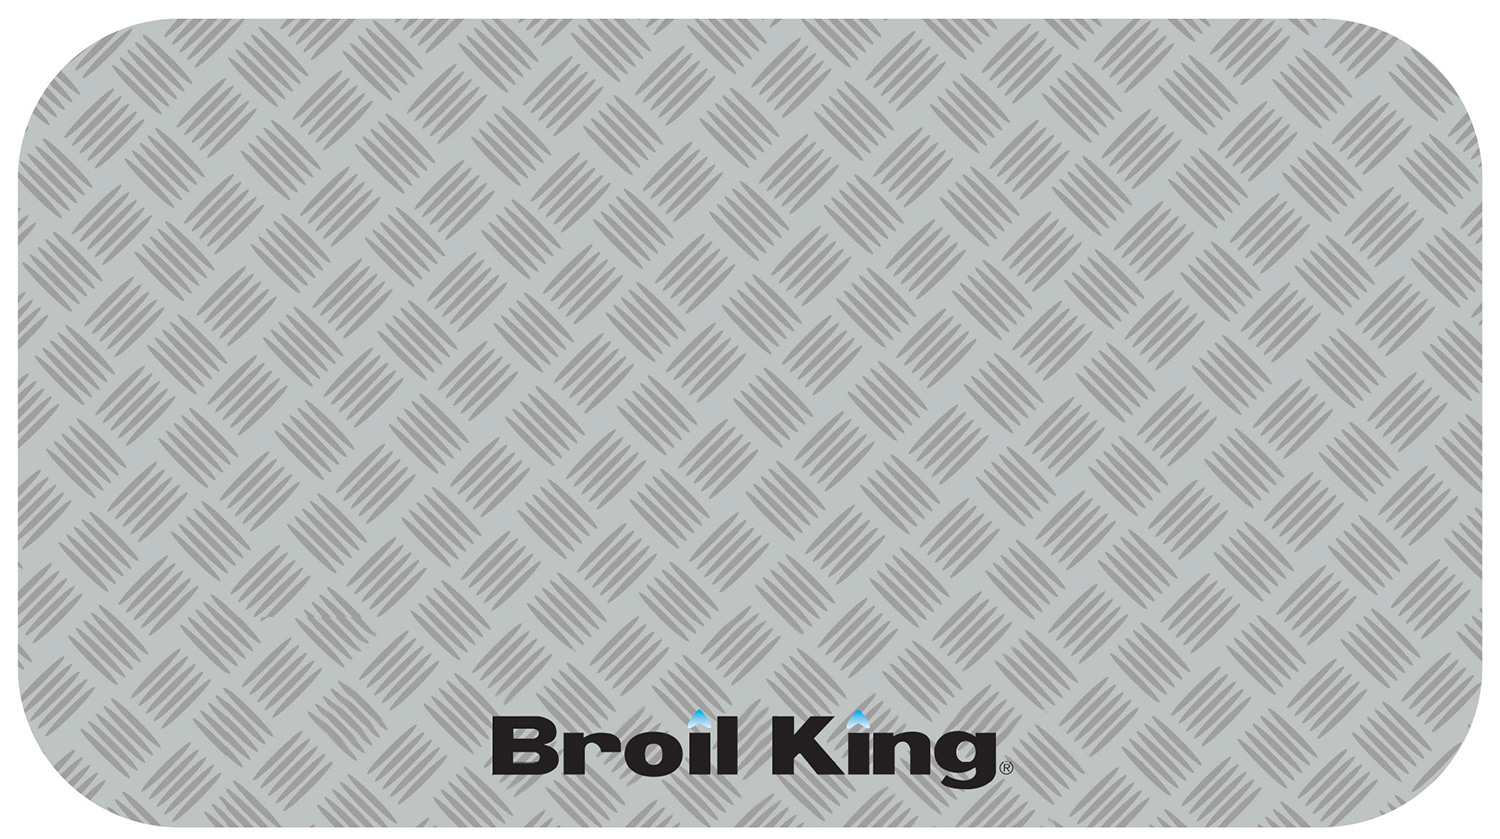 Broil King Grillmatte Silber